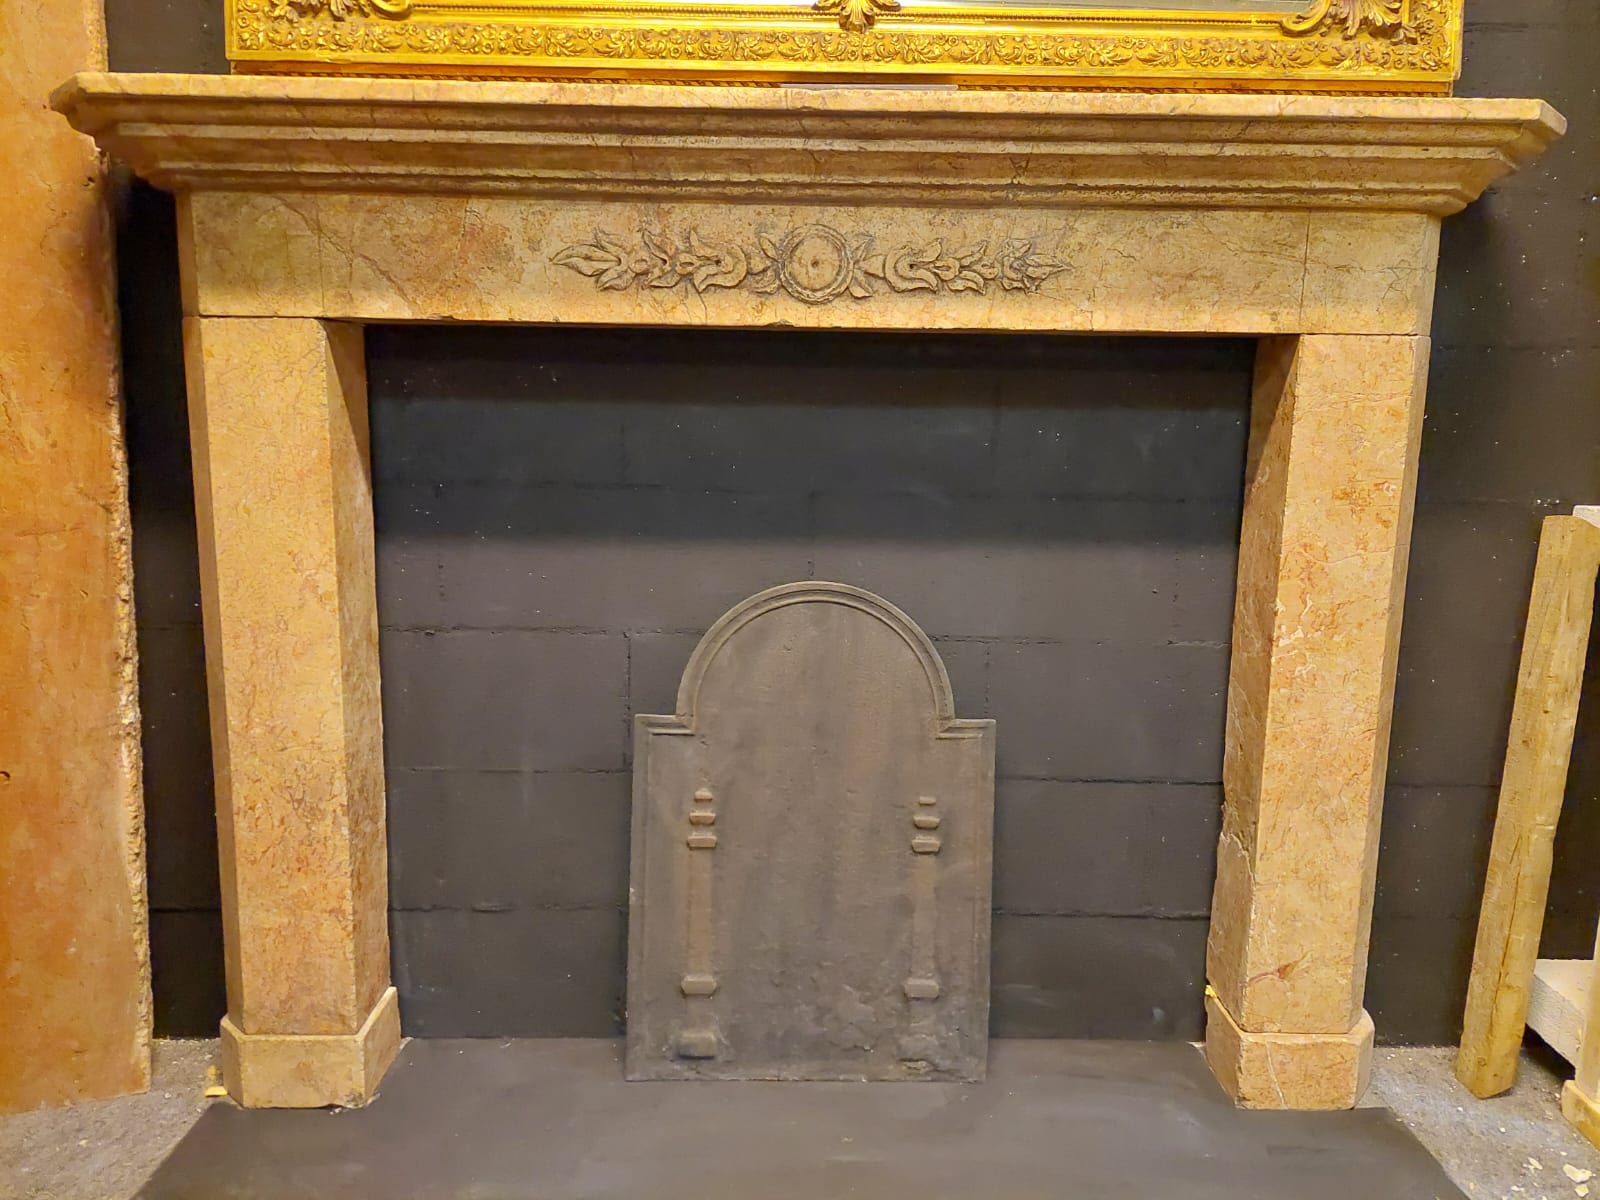 chm737 - fireplace in Breccia Oniciata marble, 19th century, cm w 170 x h 124